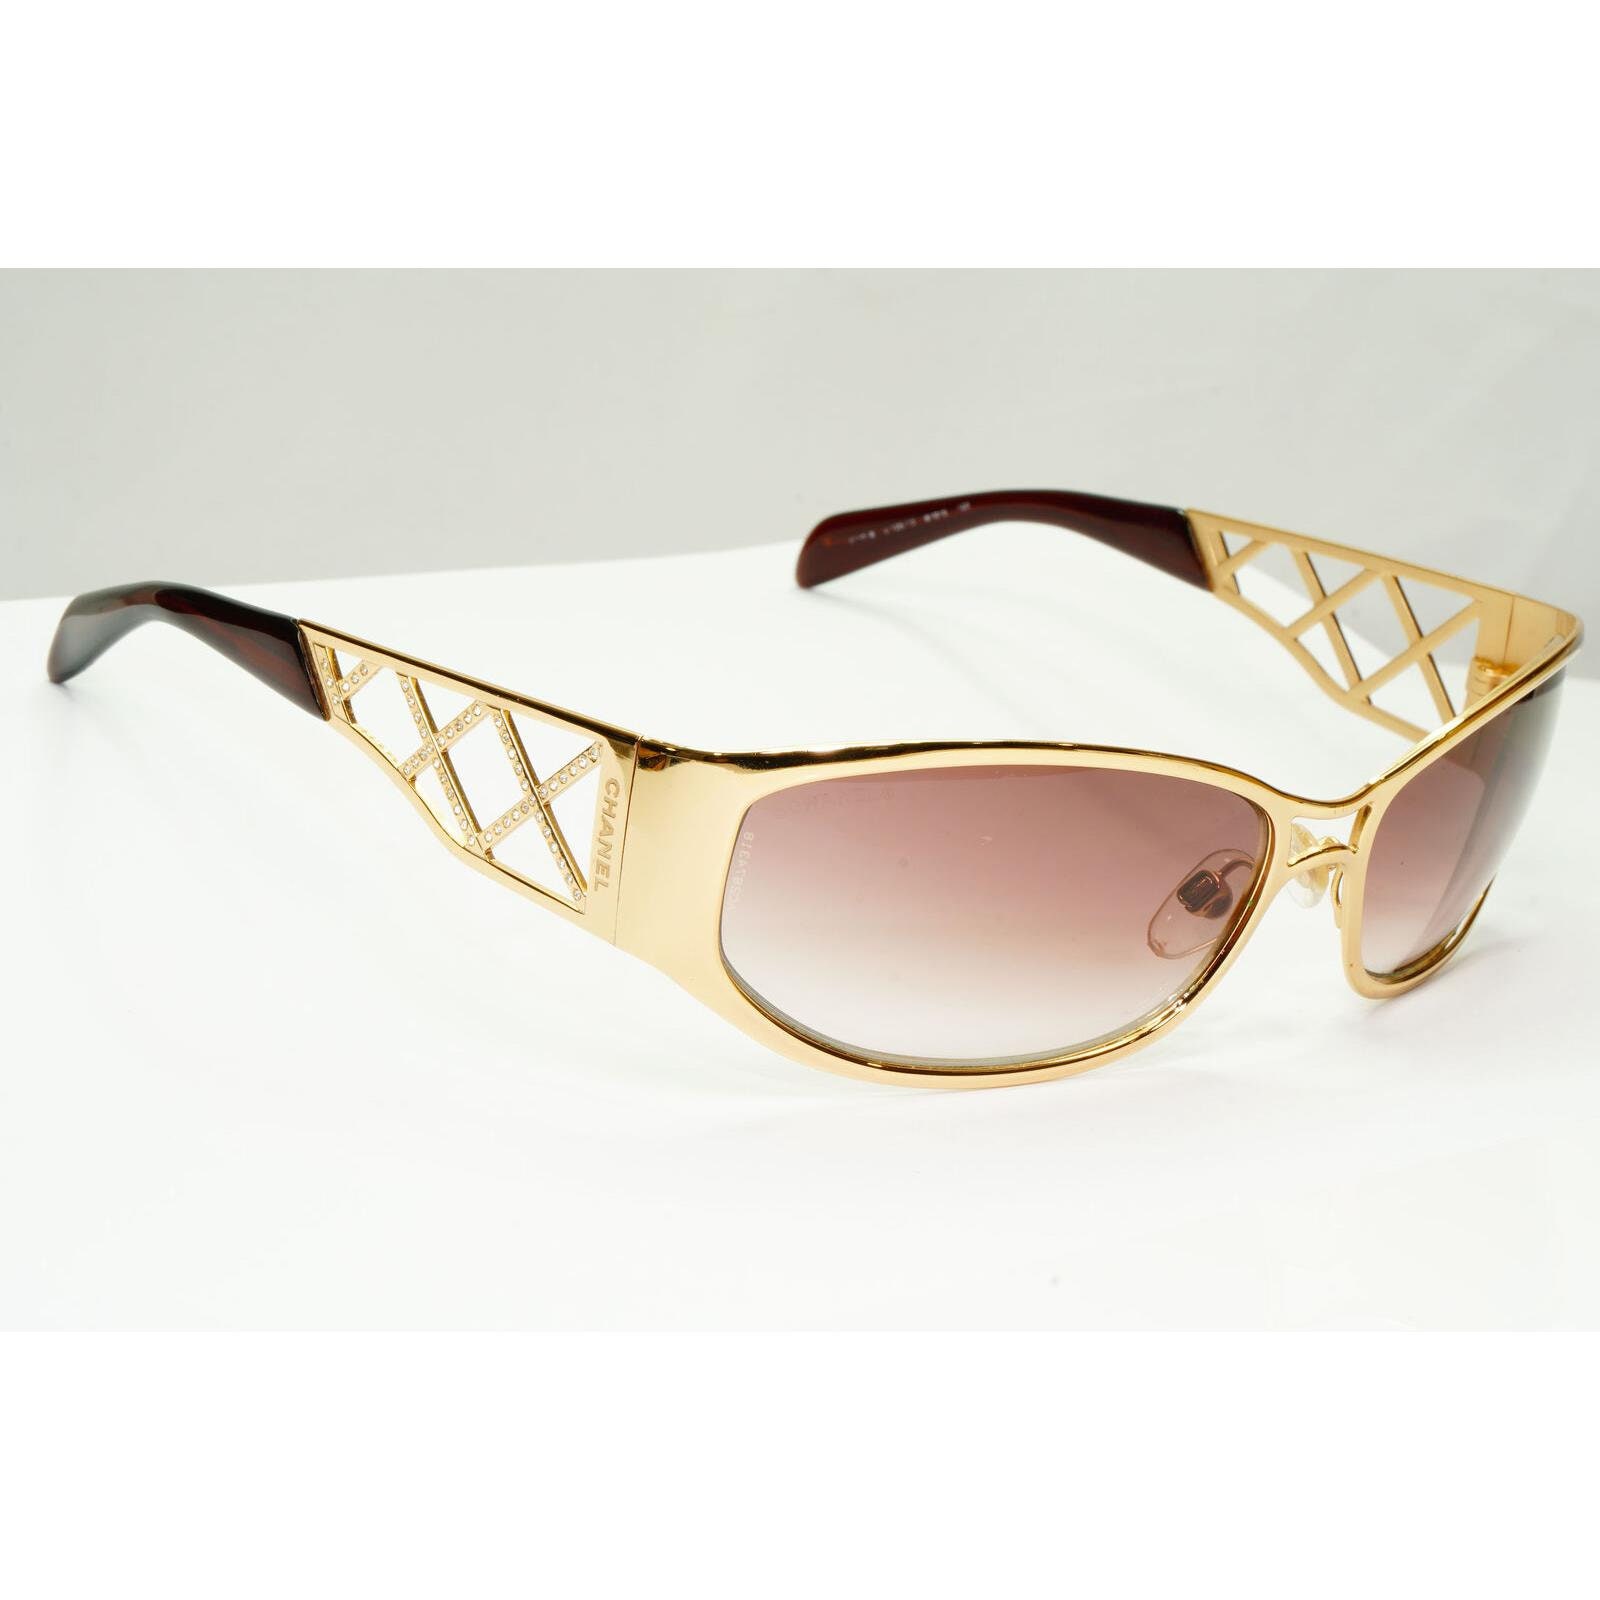 Chanel 2005 Vintage Sunglasses Brown Gold Diamante Metal 